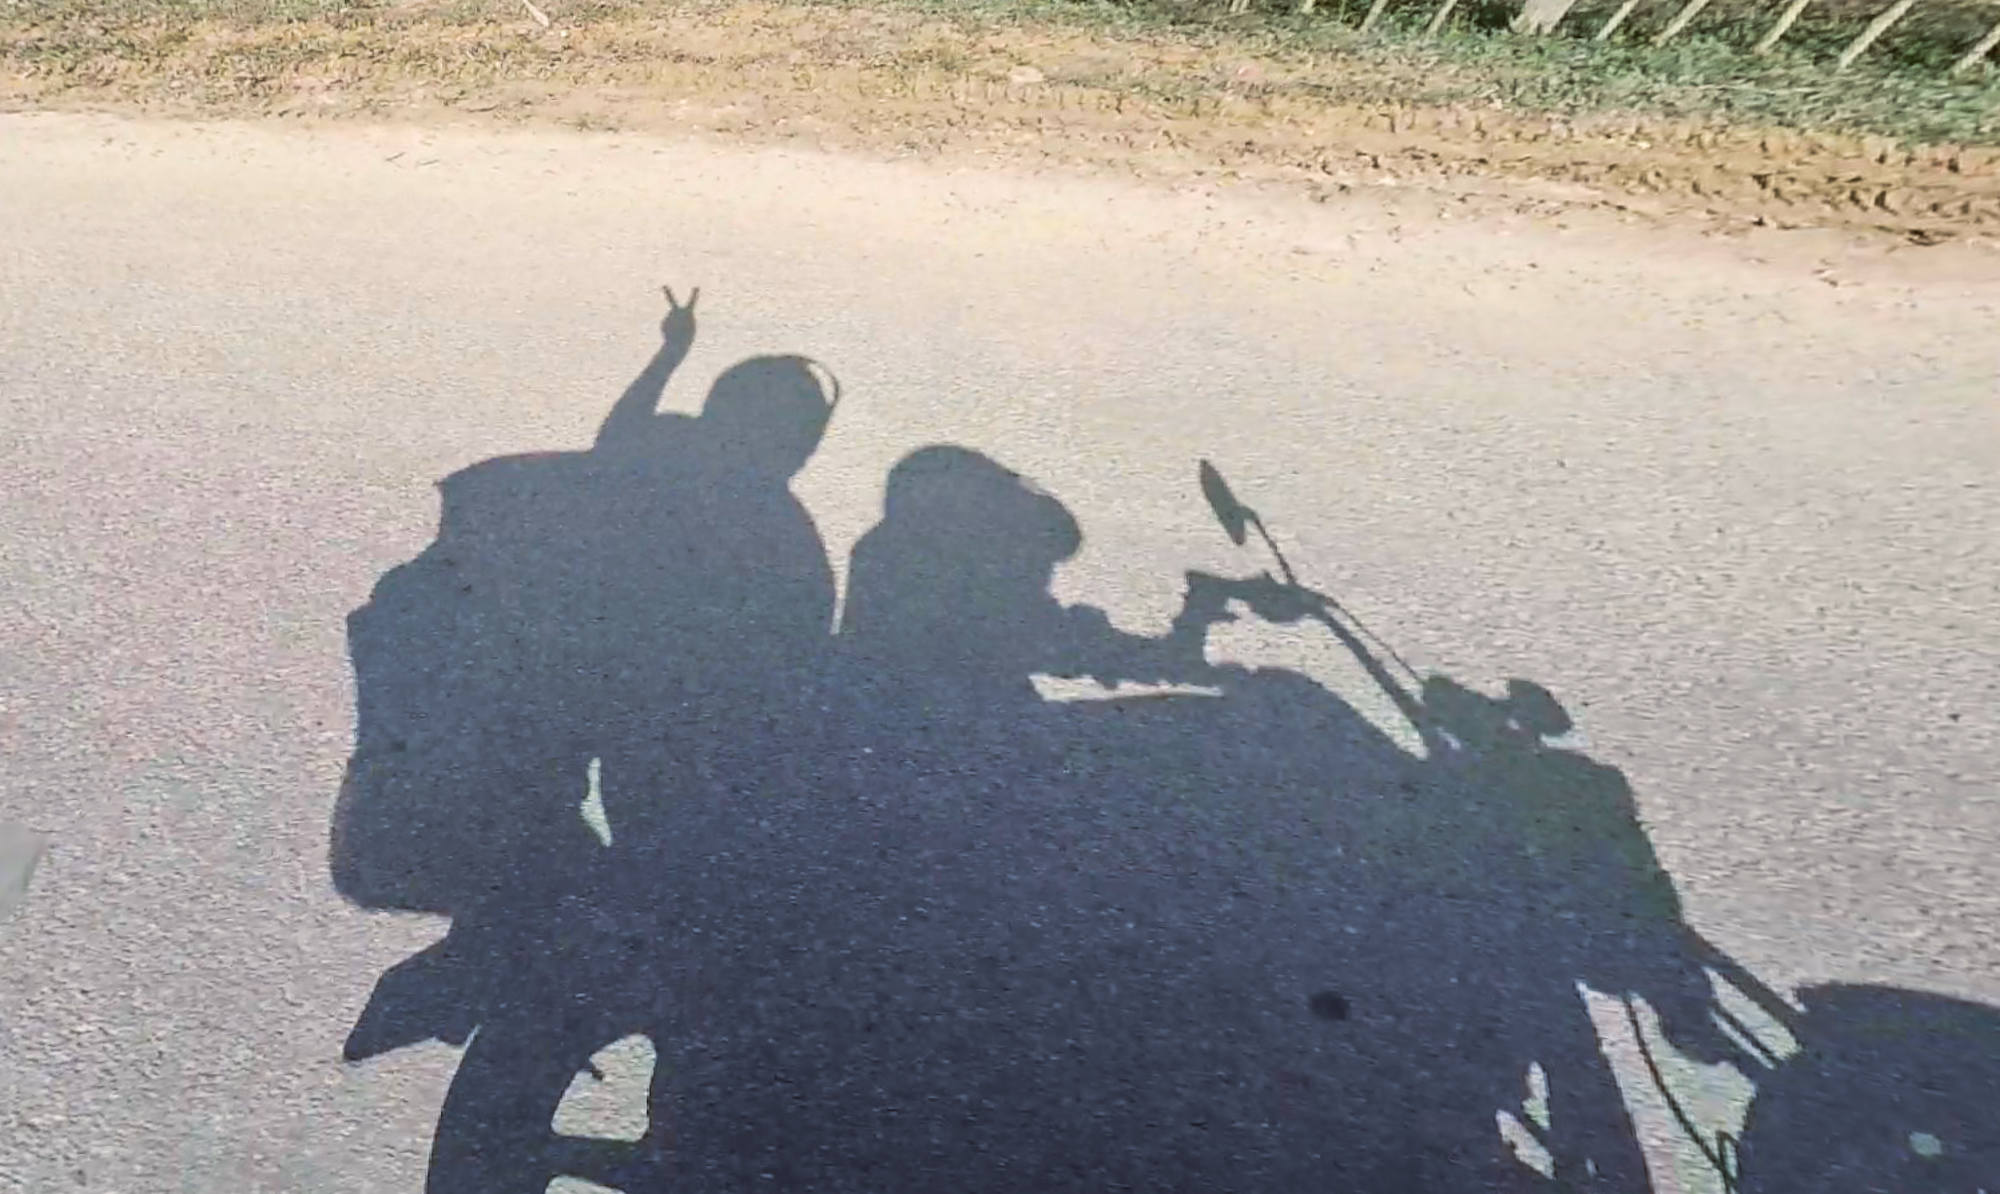 Easy Rider Mogroach Vietnam